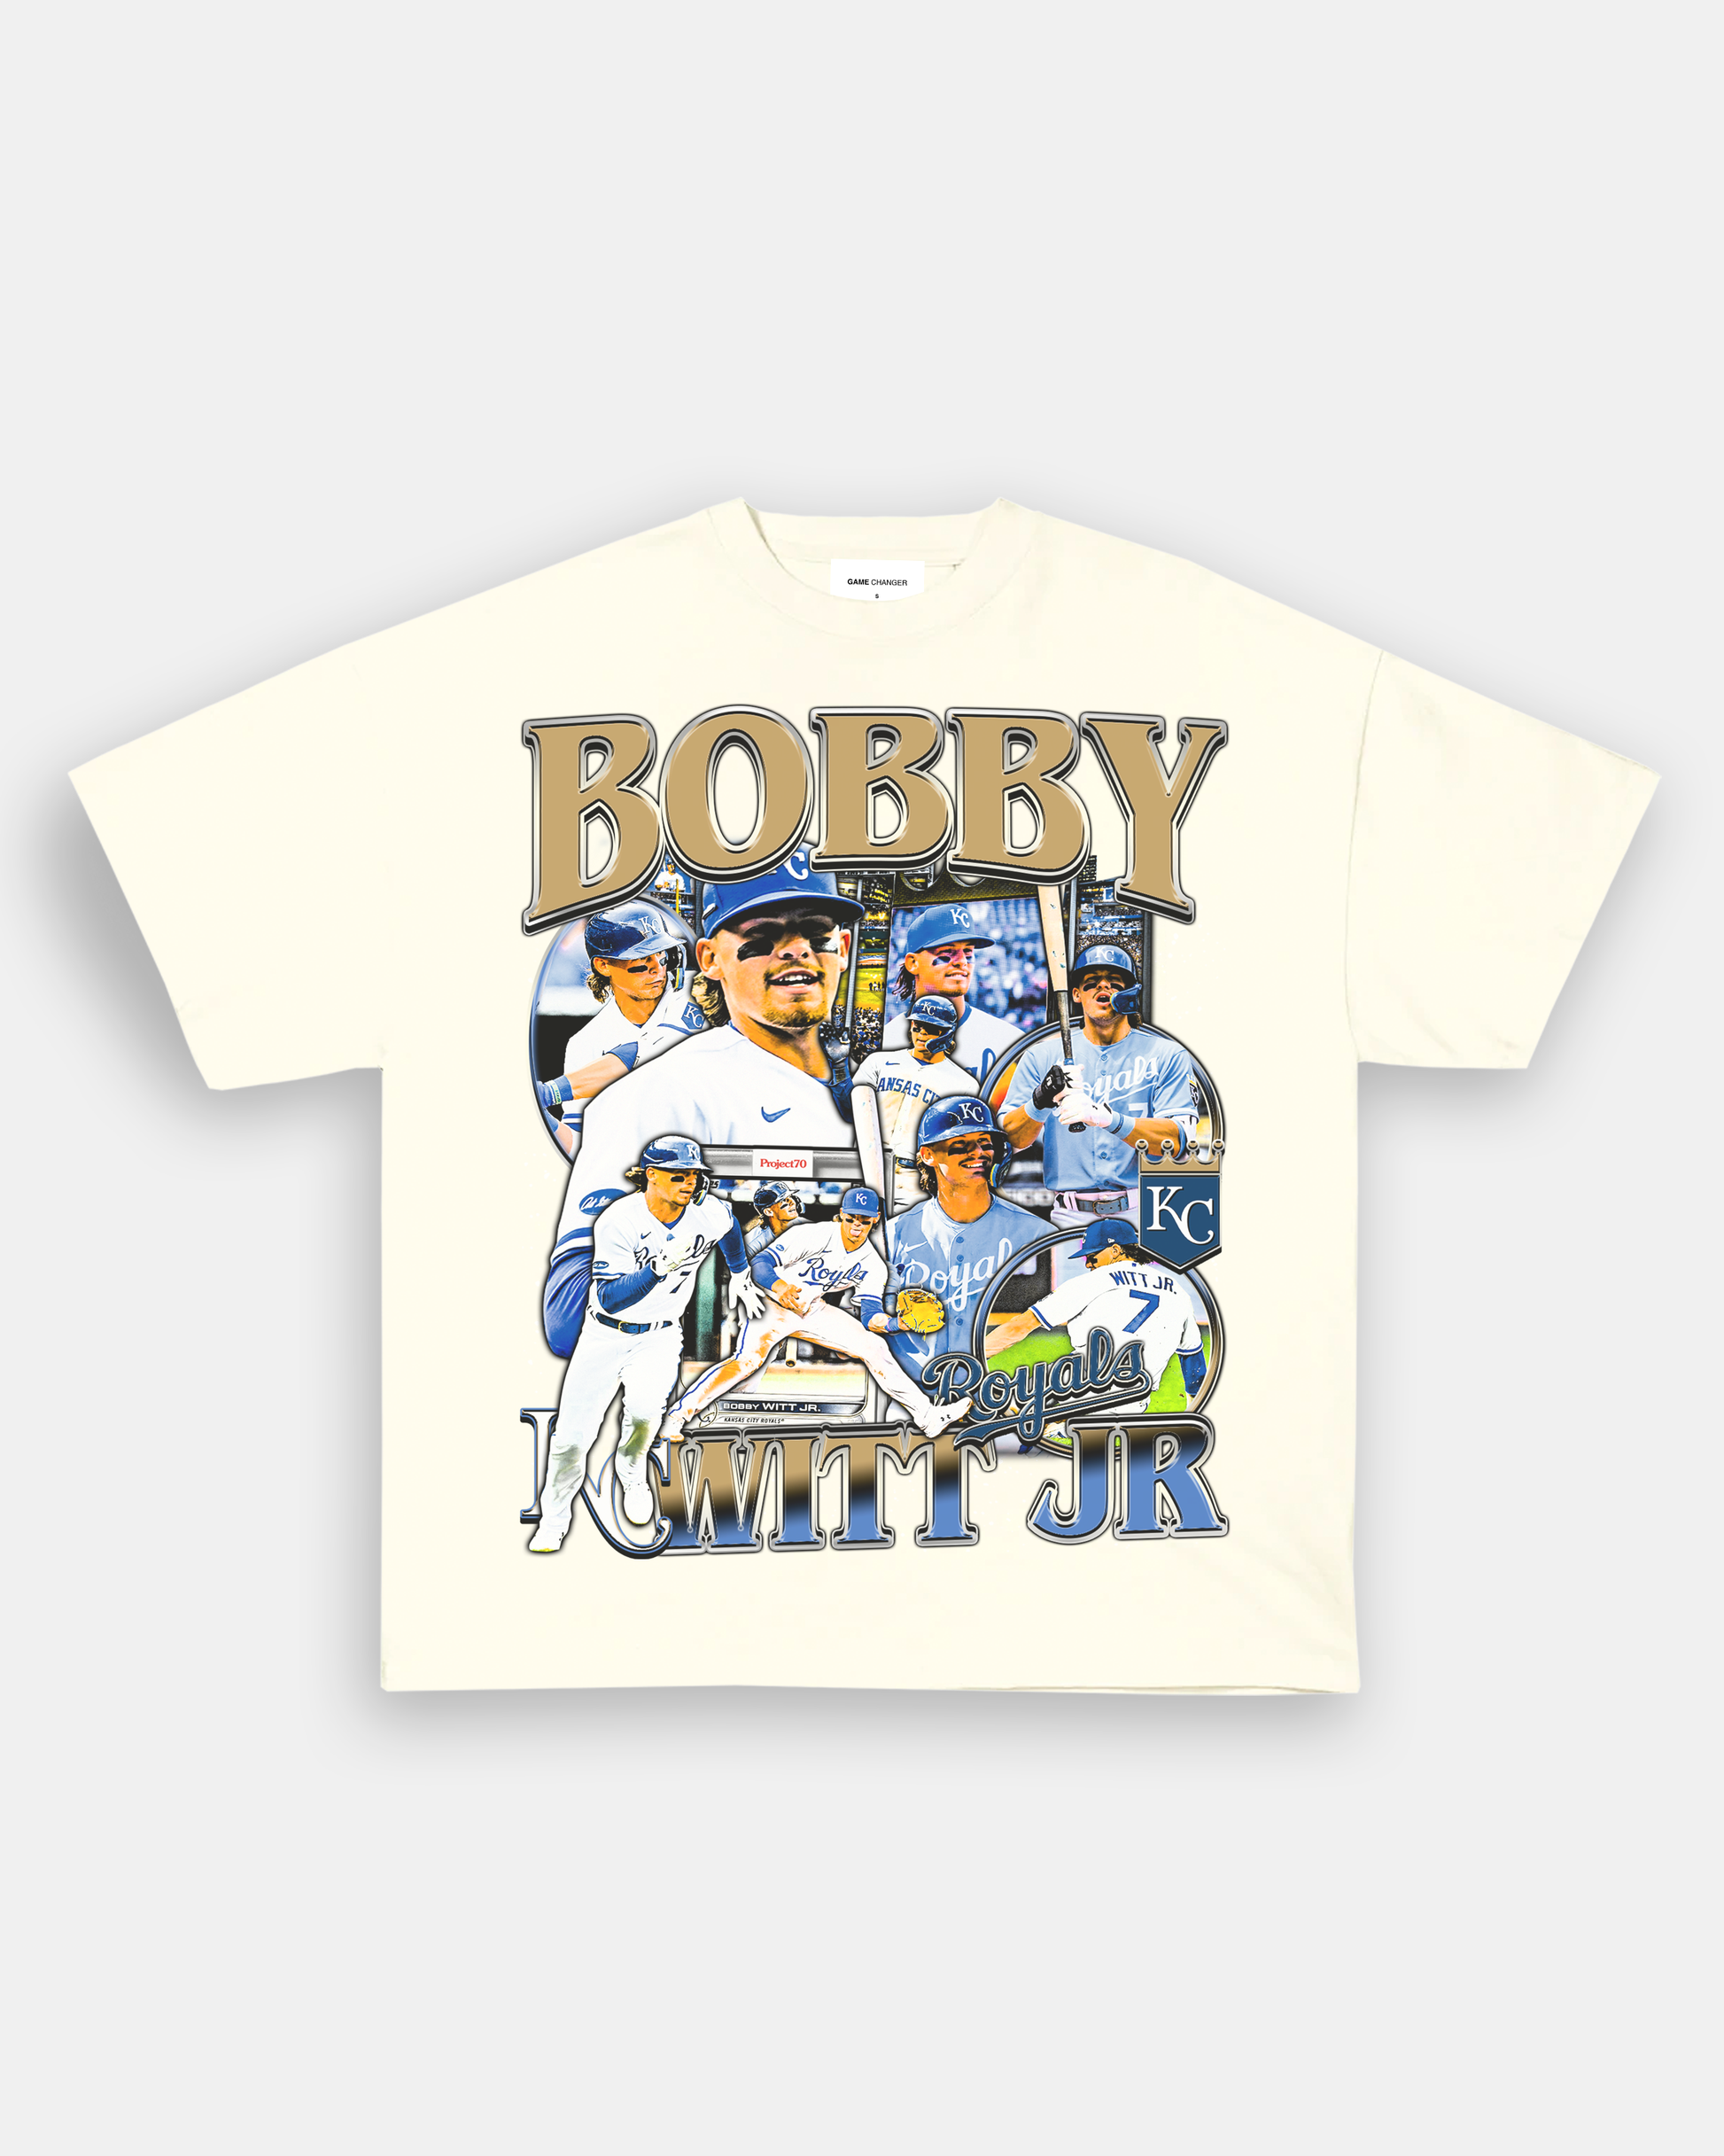 Official Bobby Witt Jr. Kansas City Royals Jersey, Bobby Witt Jr. Shirts,  Royals Apparel, Bobby Witt Jr. Gear